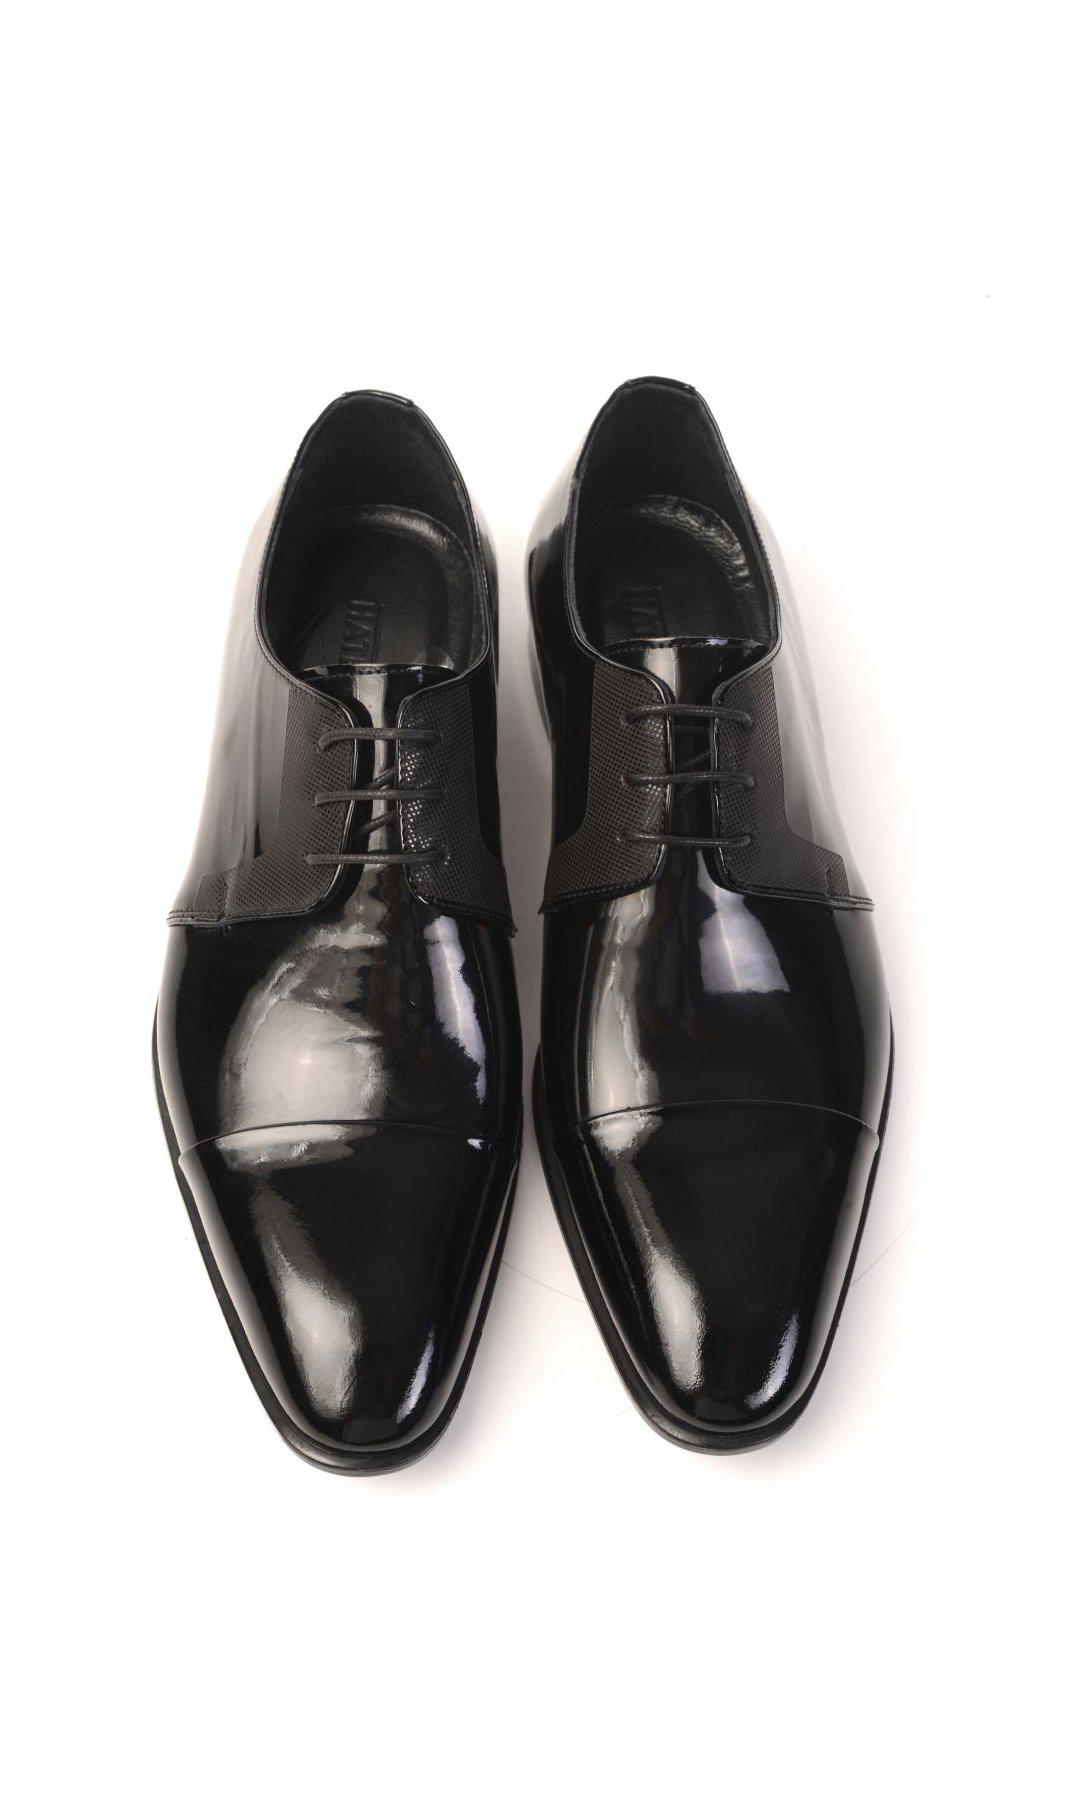 shiny black slip on shoes